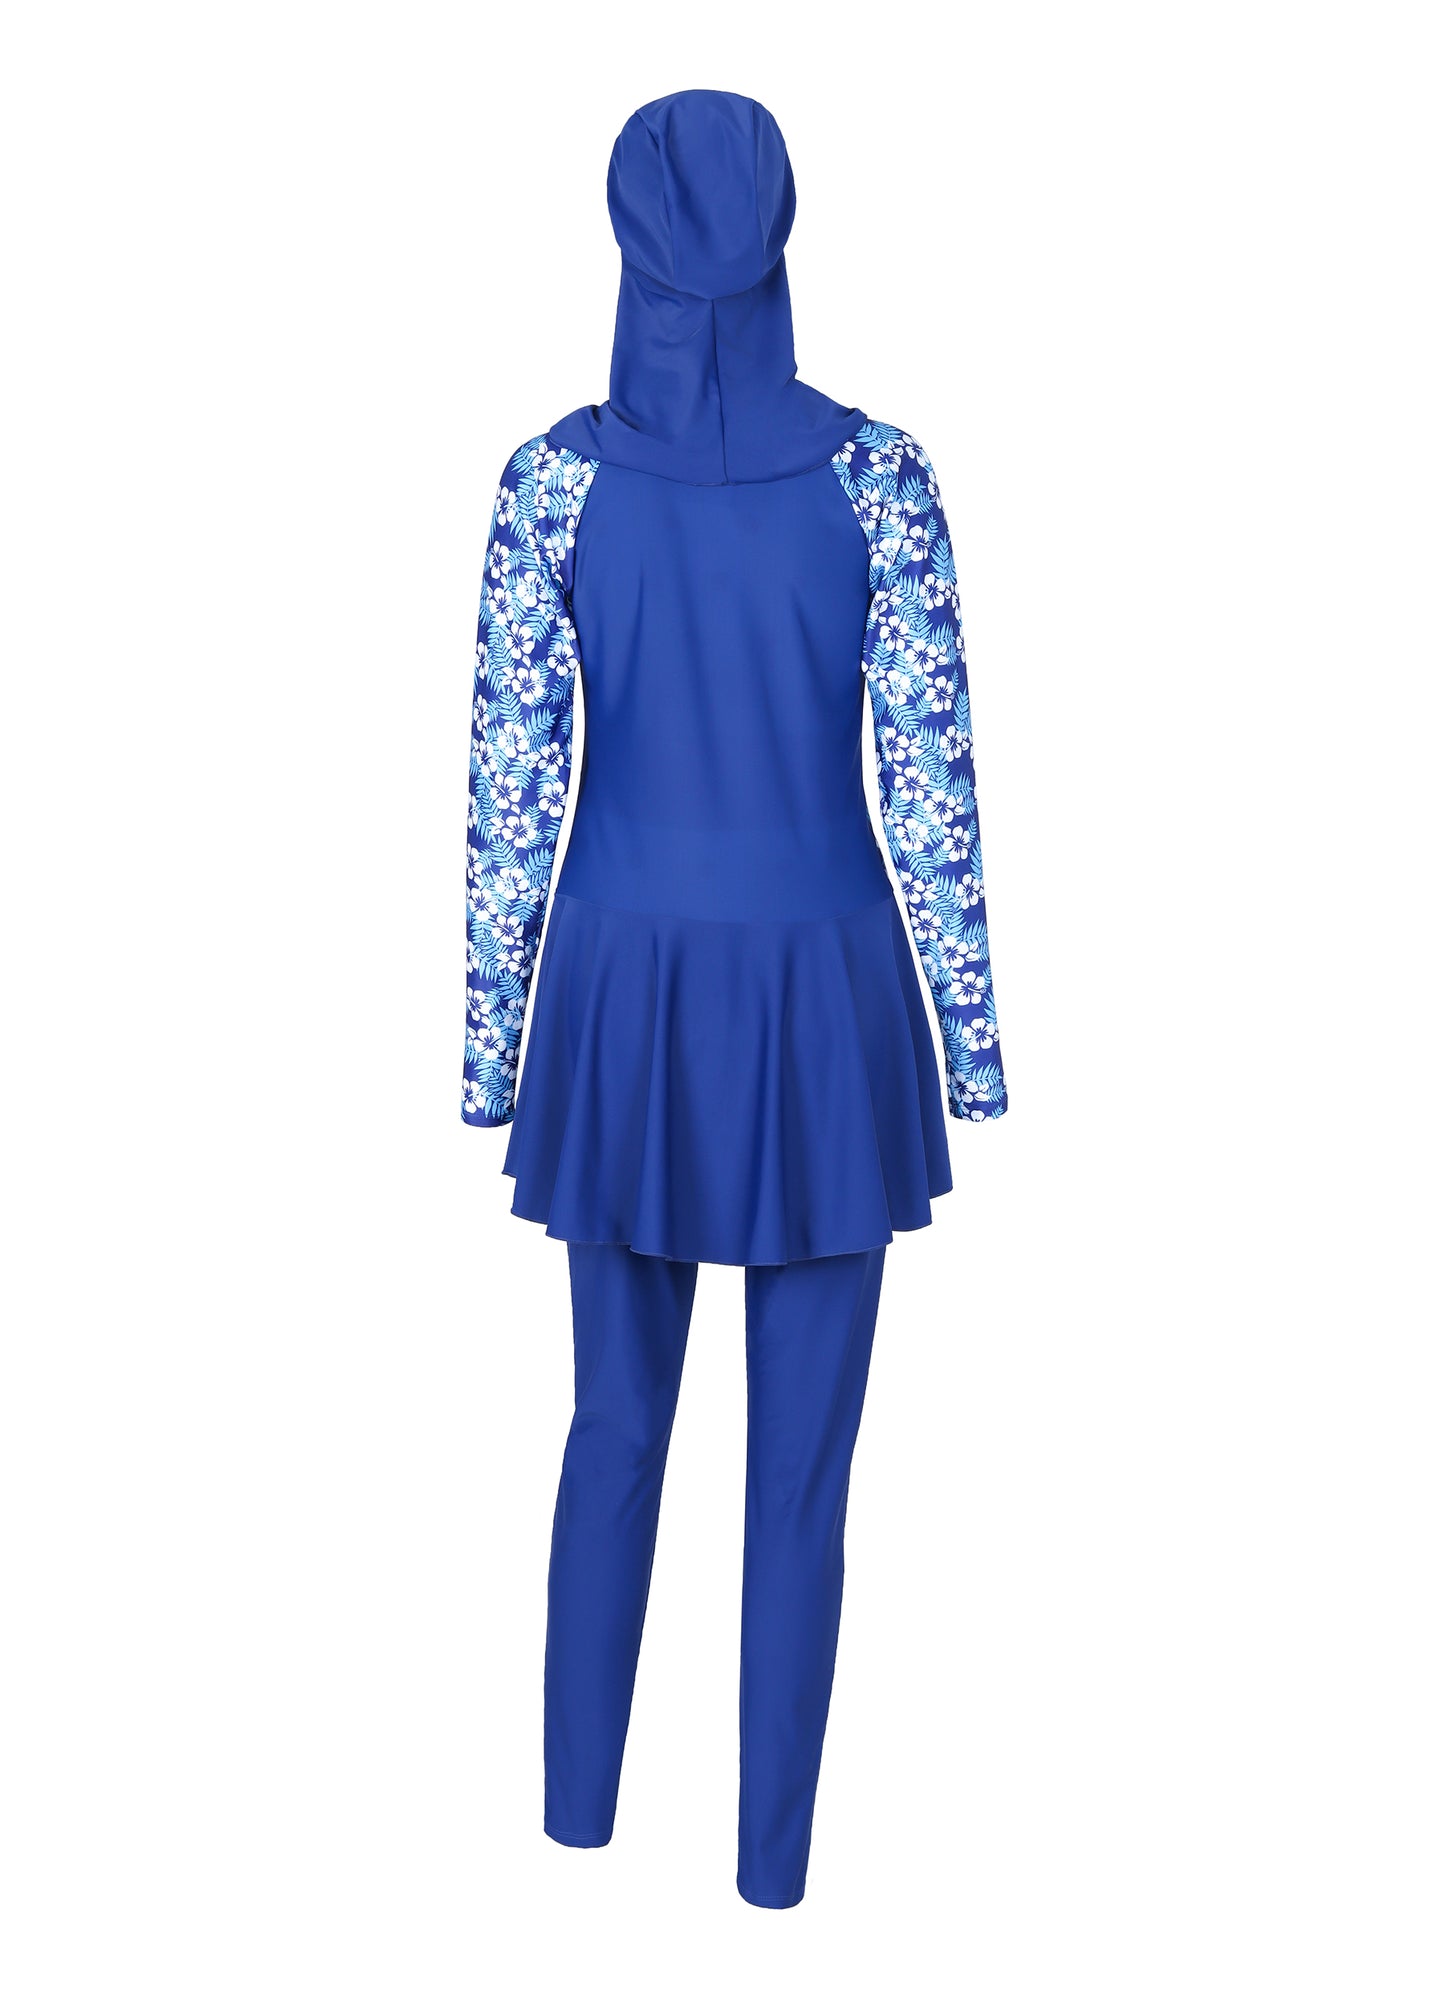 muslim swimming suits/islamic swimming suits/4POSE Women's Tropical Print Peplum Hem Full Coverage Swimsuit-Blue base match print pattern back view